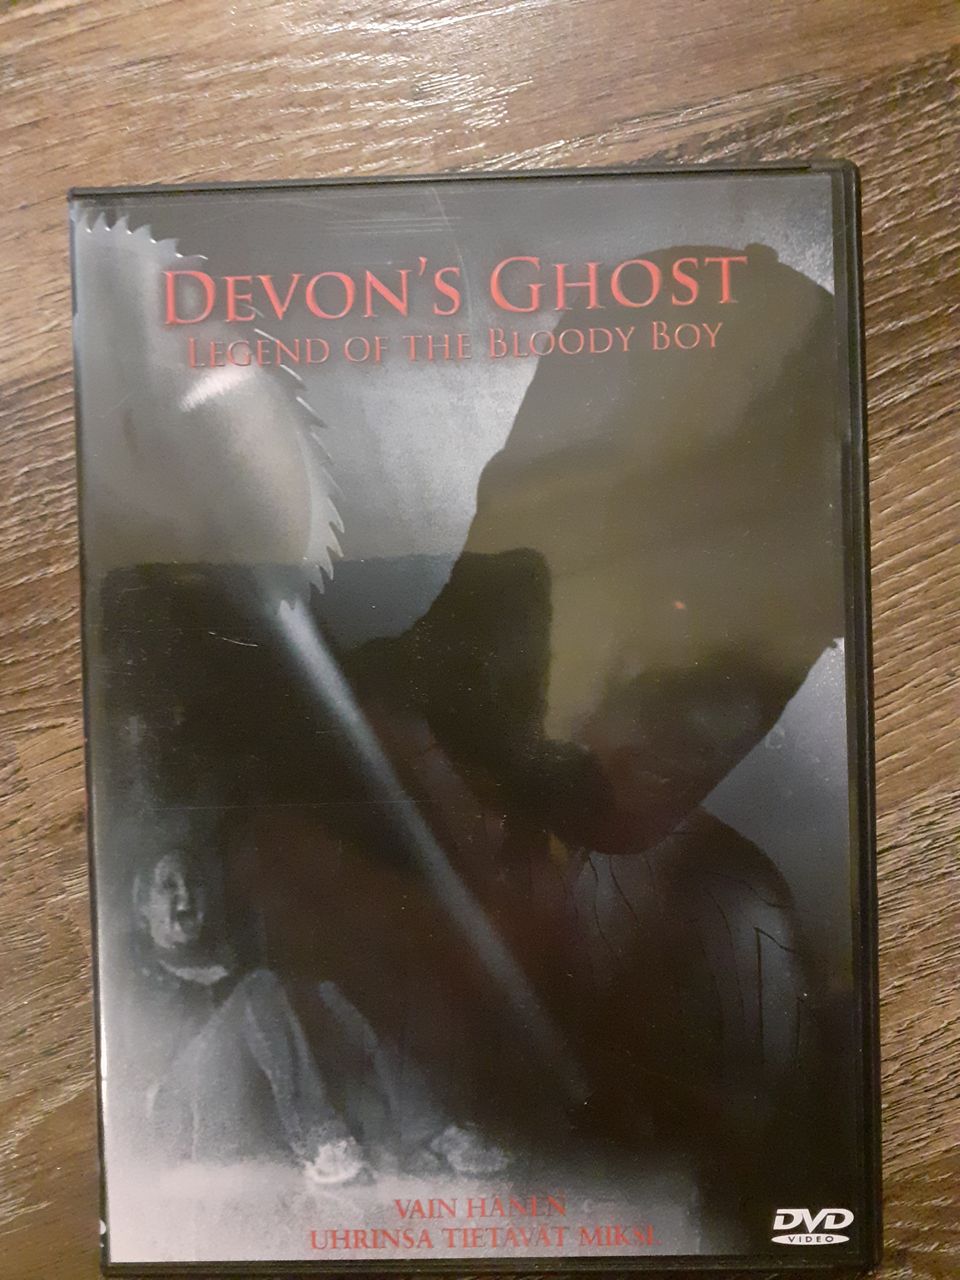 Devon's ghost - legend of the bloody boy